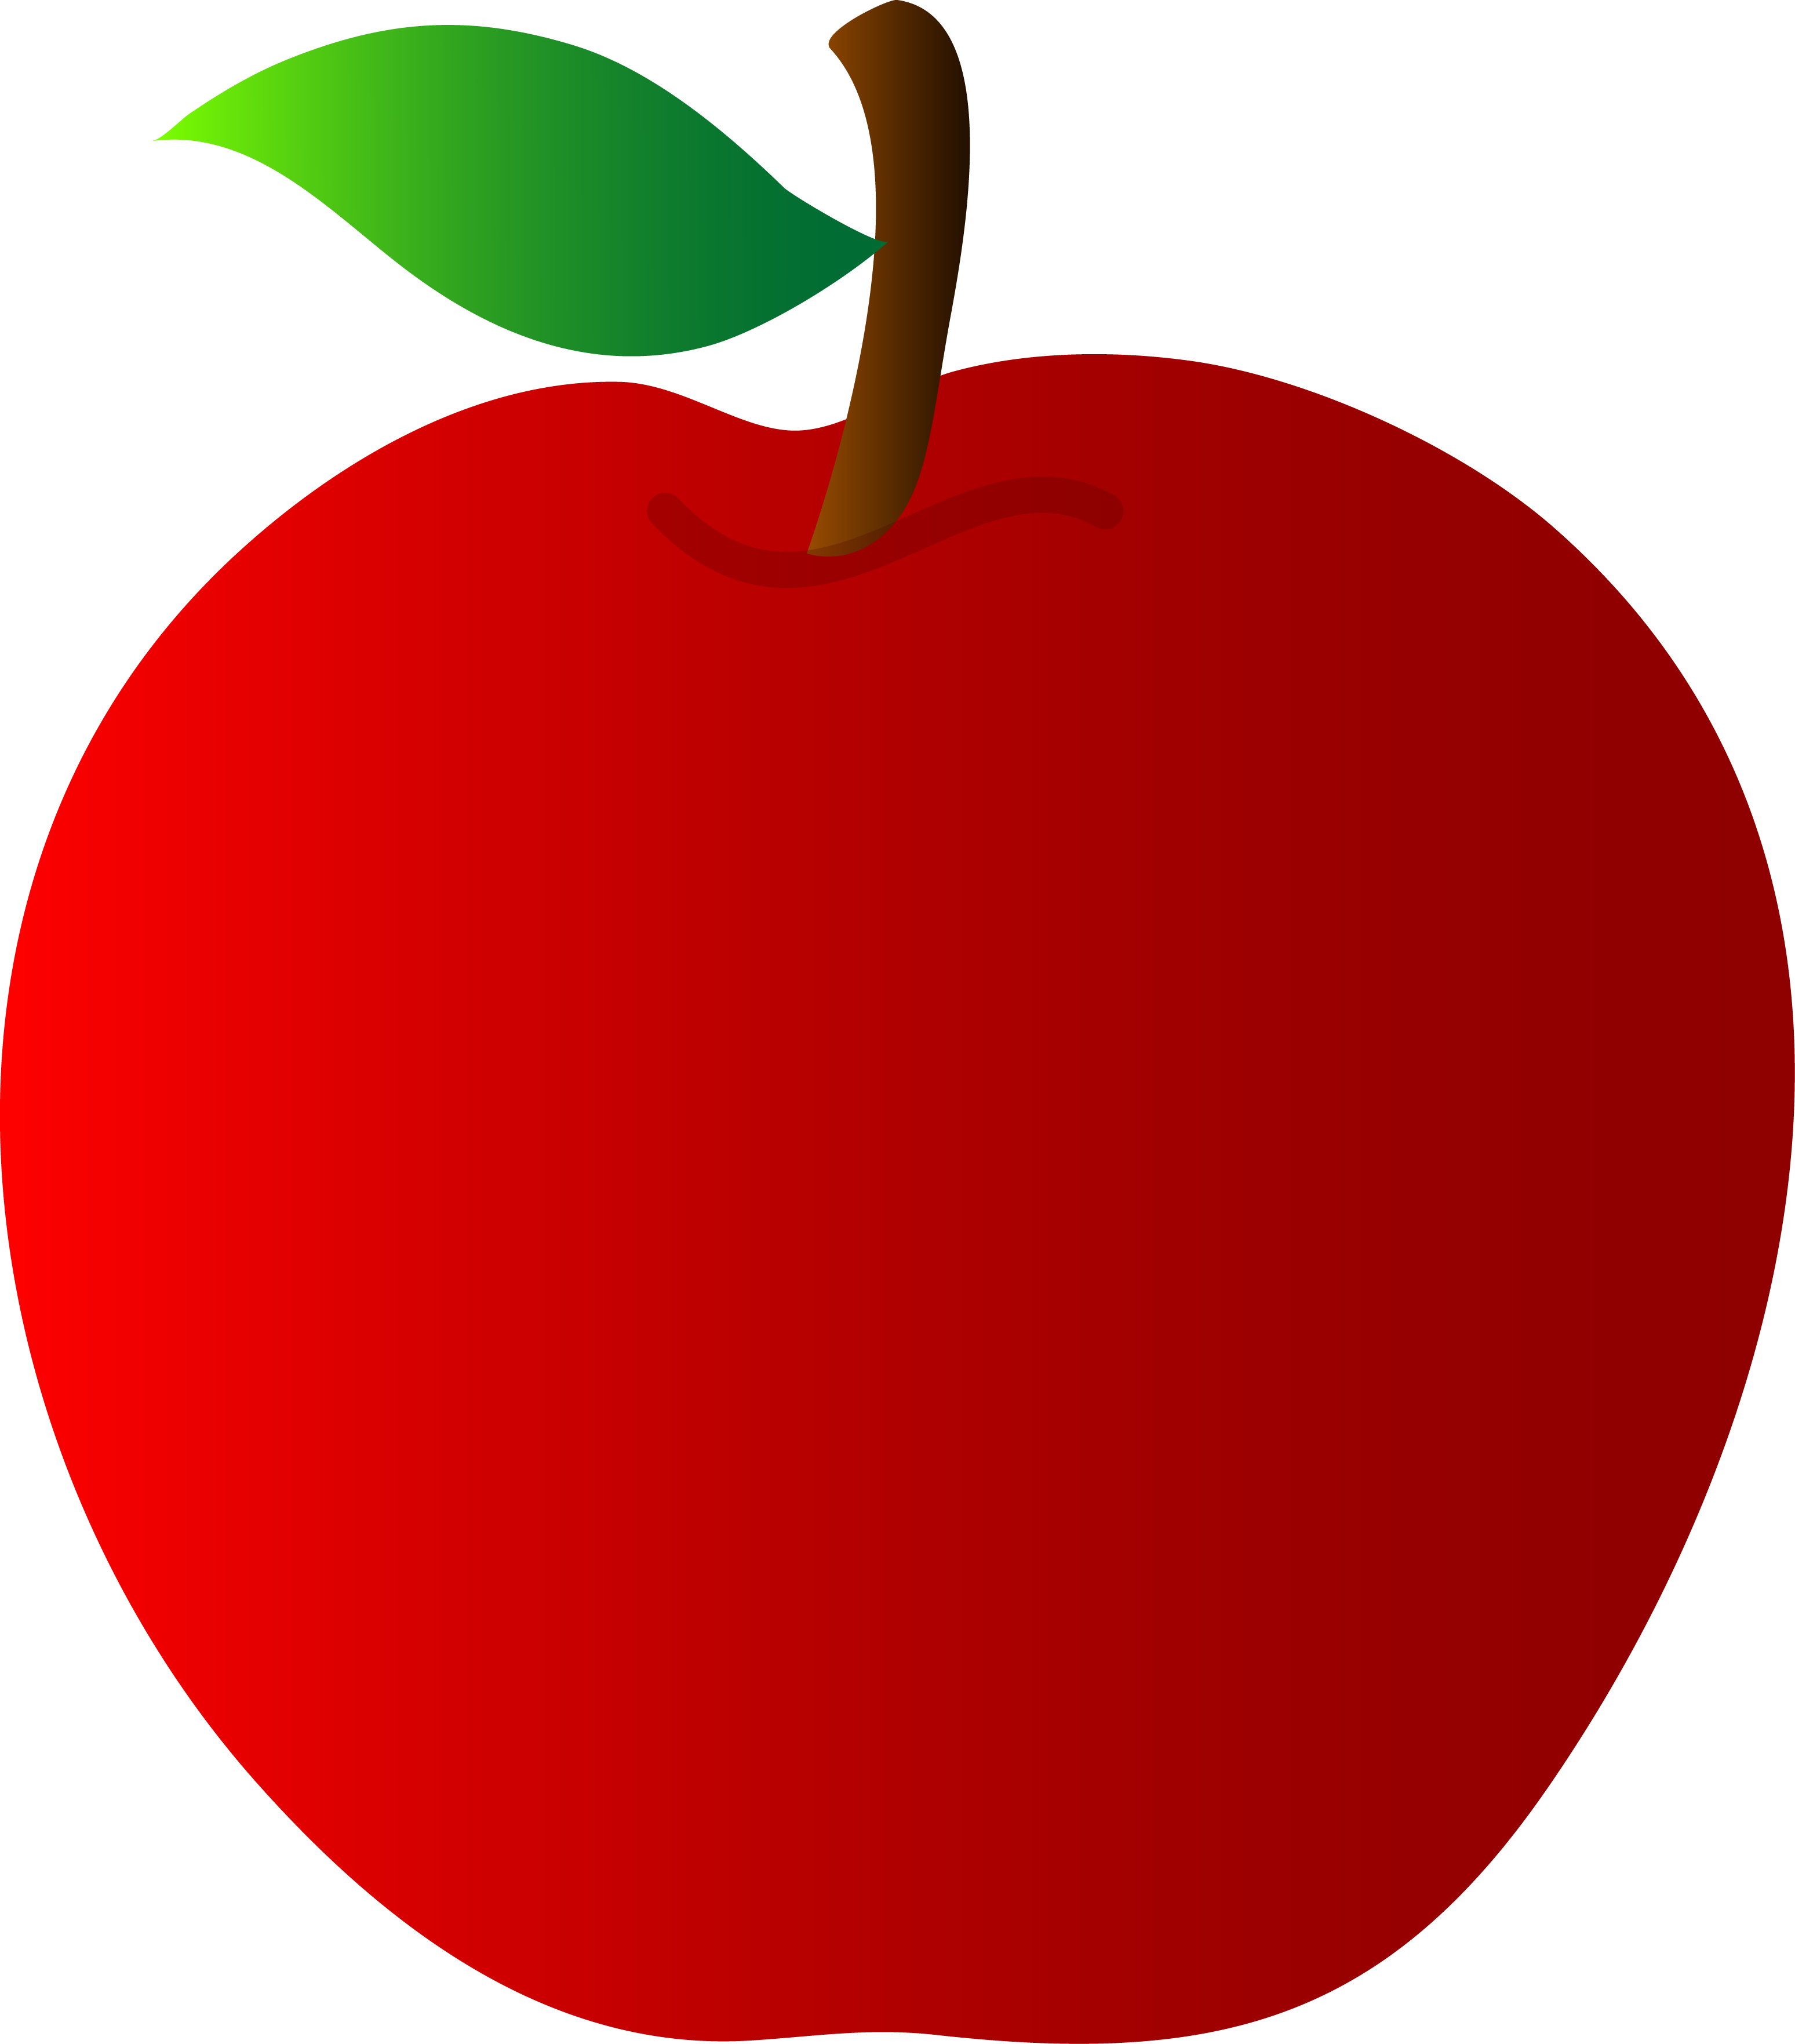 Red apple; Cartoon Red Apple